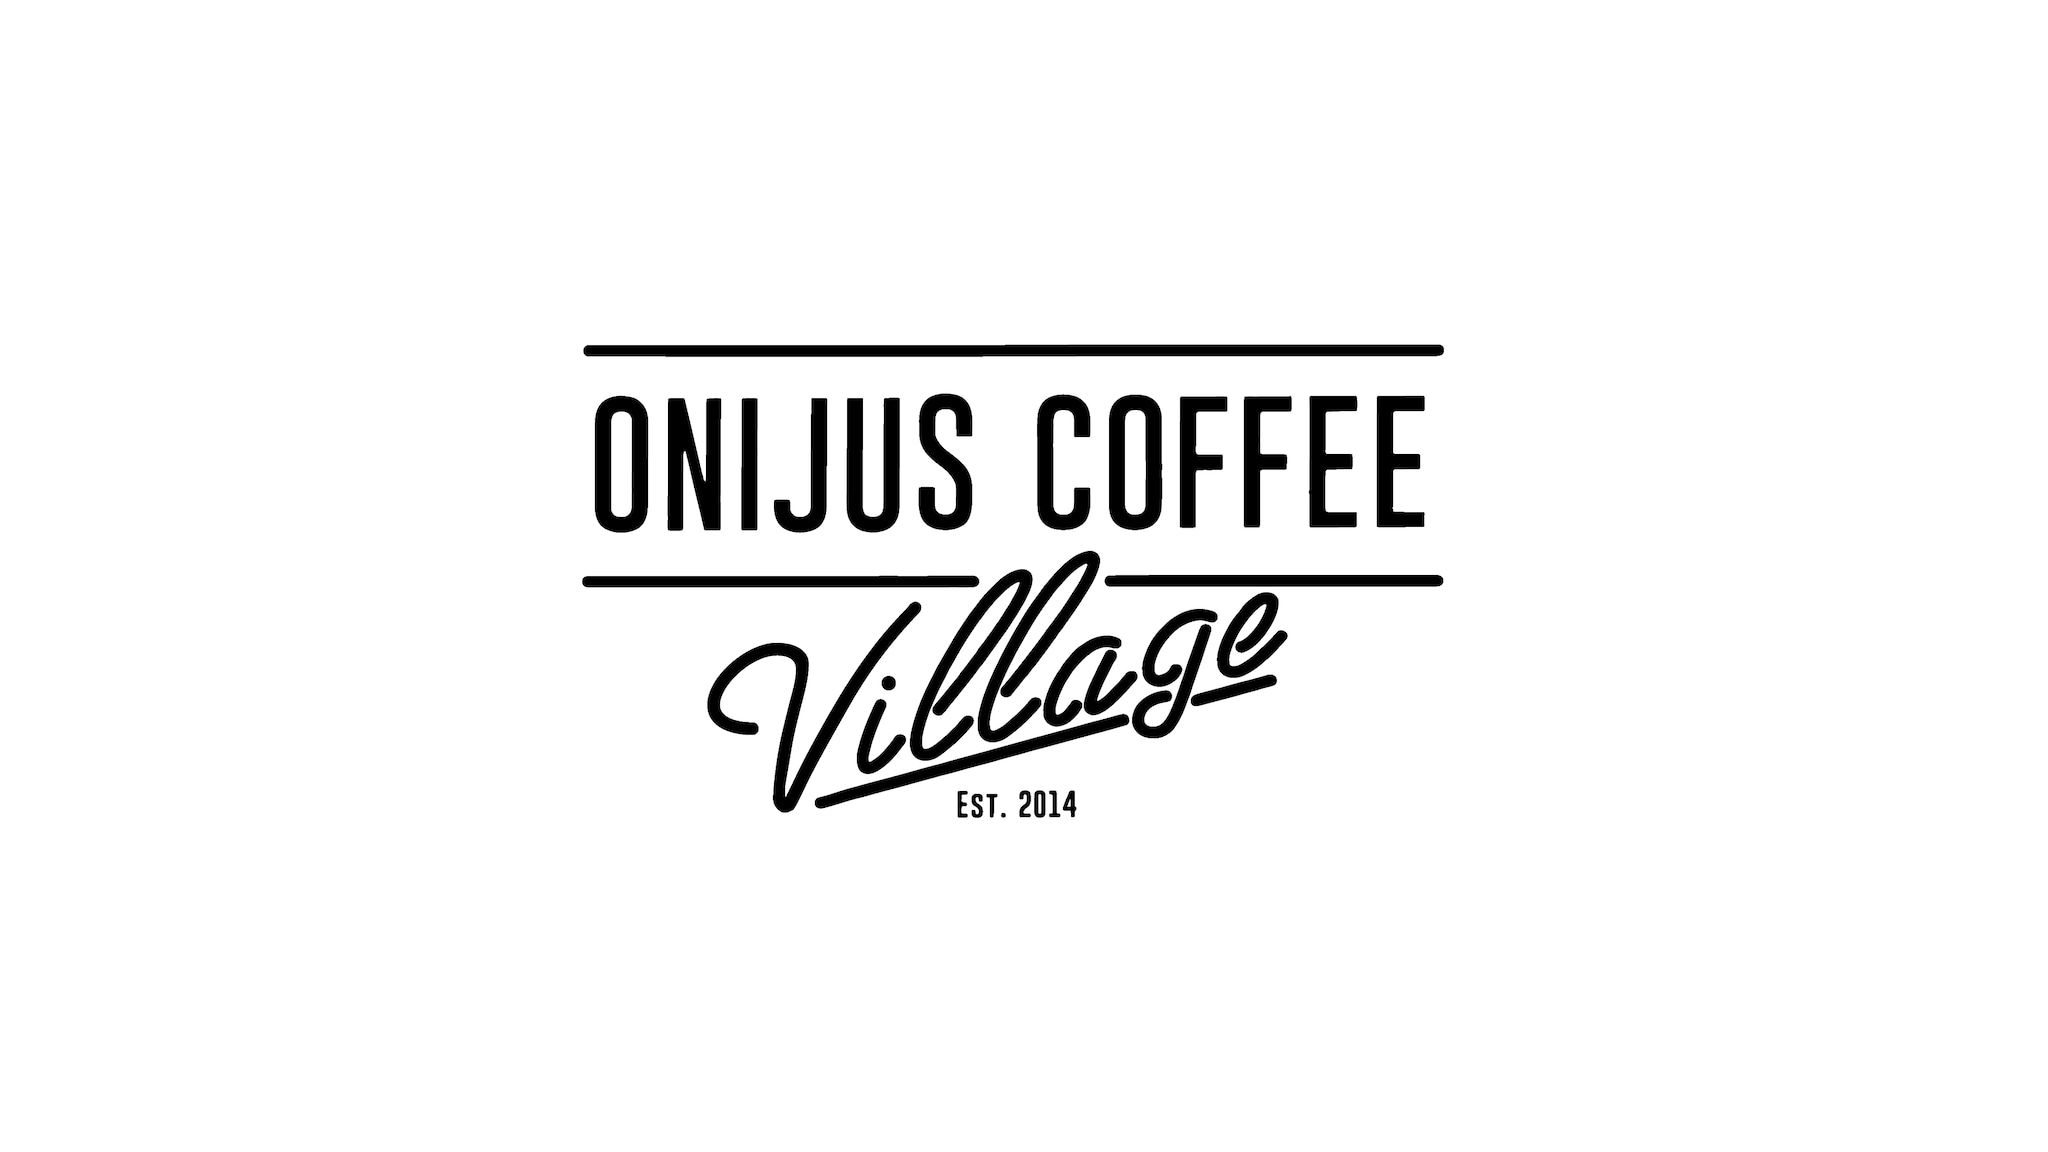 ONIJUS COFFEE VILLAGE